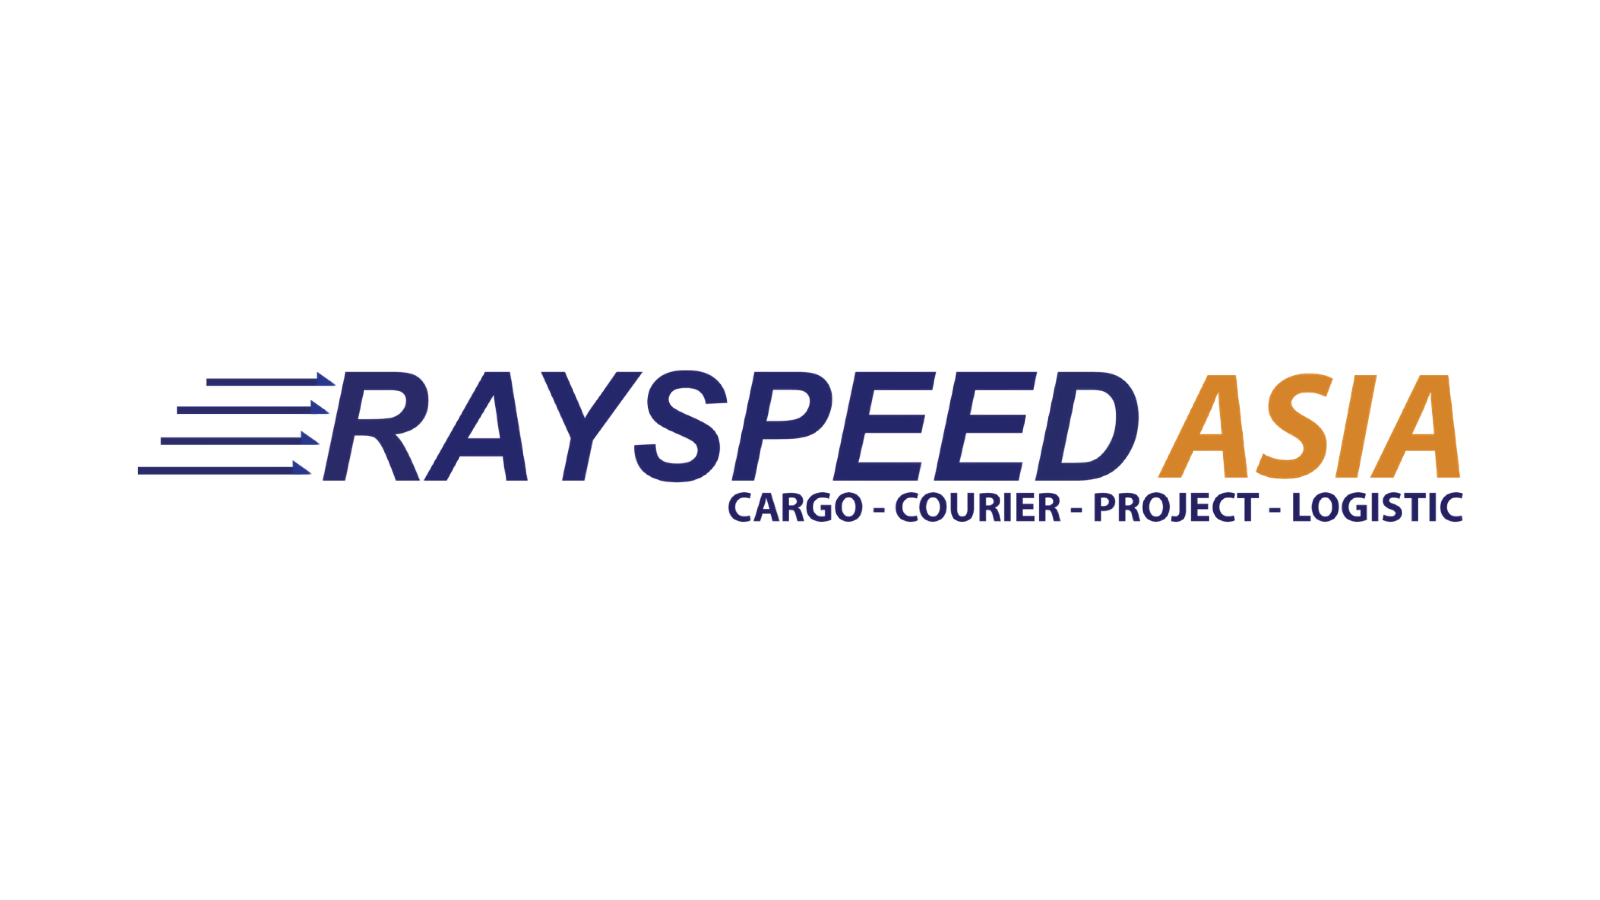 The main Logo of Rayspeed Asia